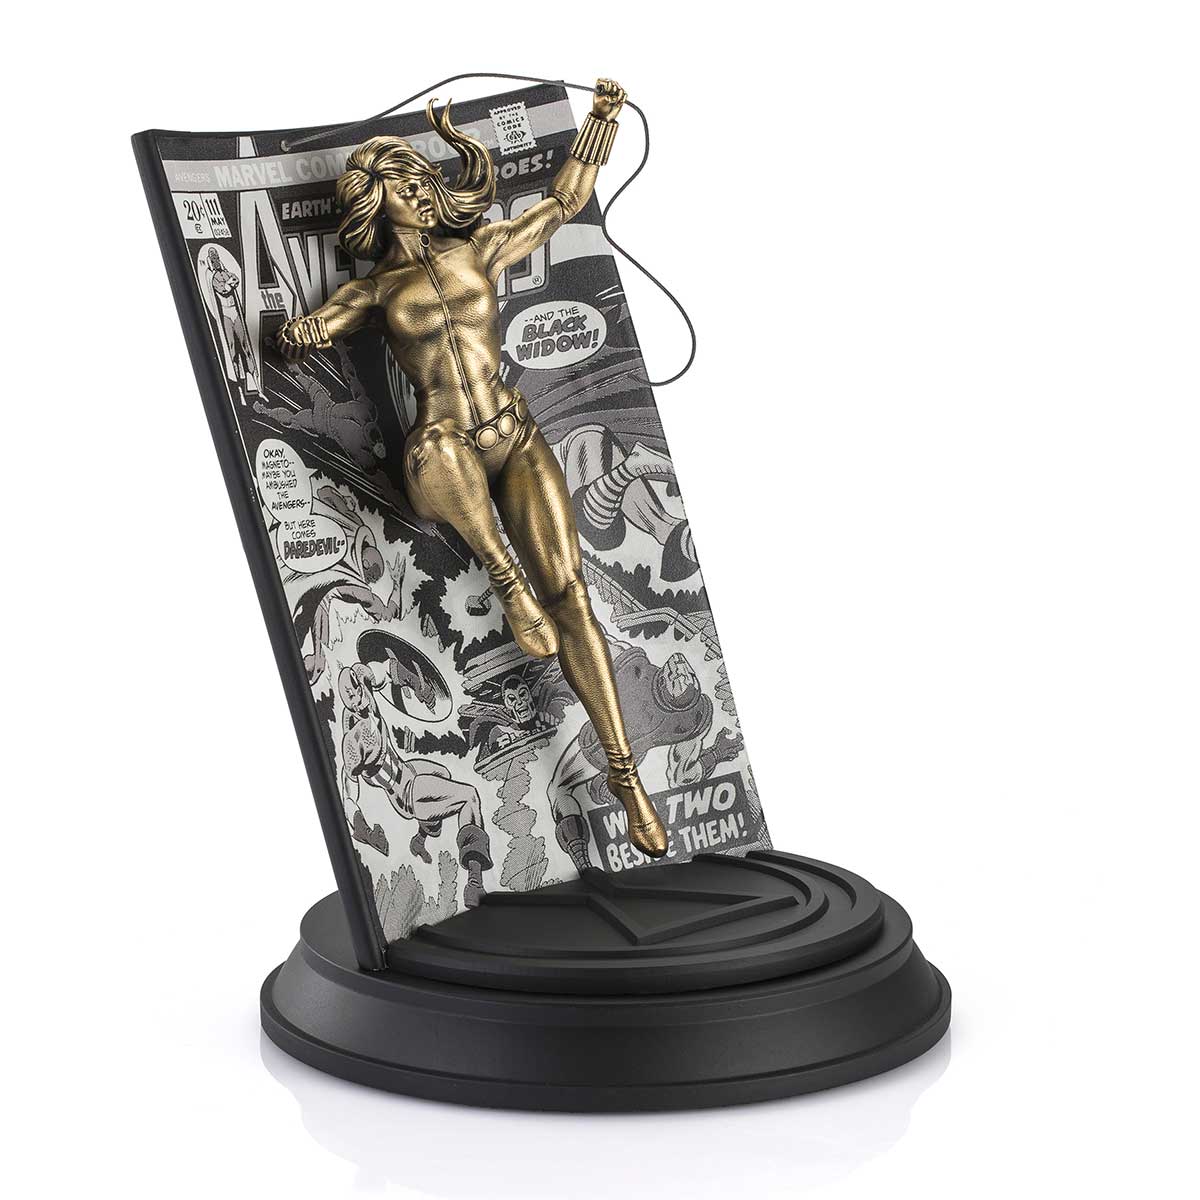 Gold Black Widow Avengers Volume 1 #111 Limited Edition Figurine - Marvel Statue